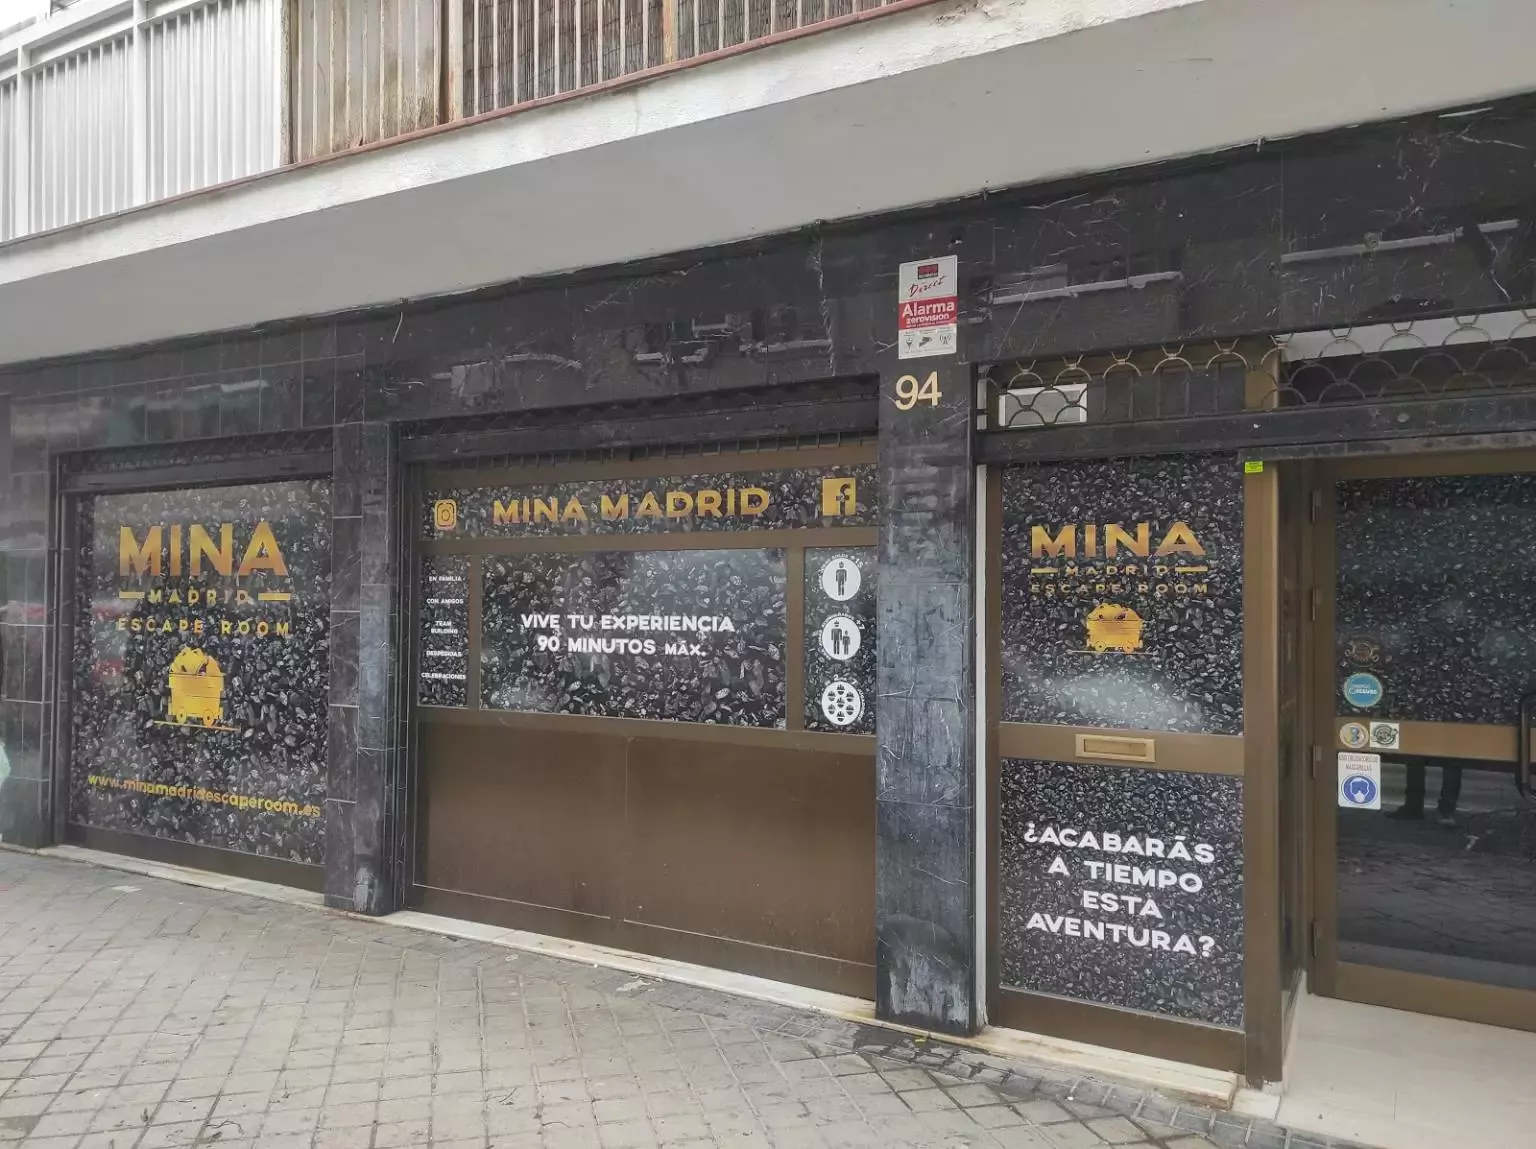 4. Mina Madrid  - Hidden Escape Room